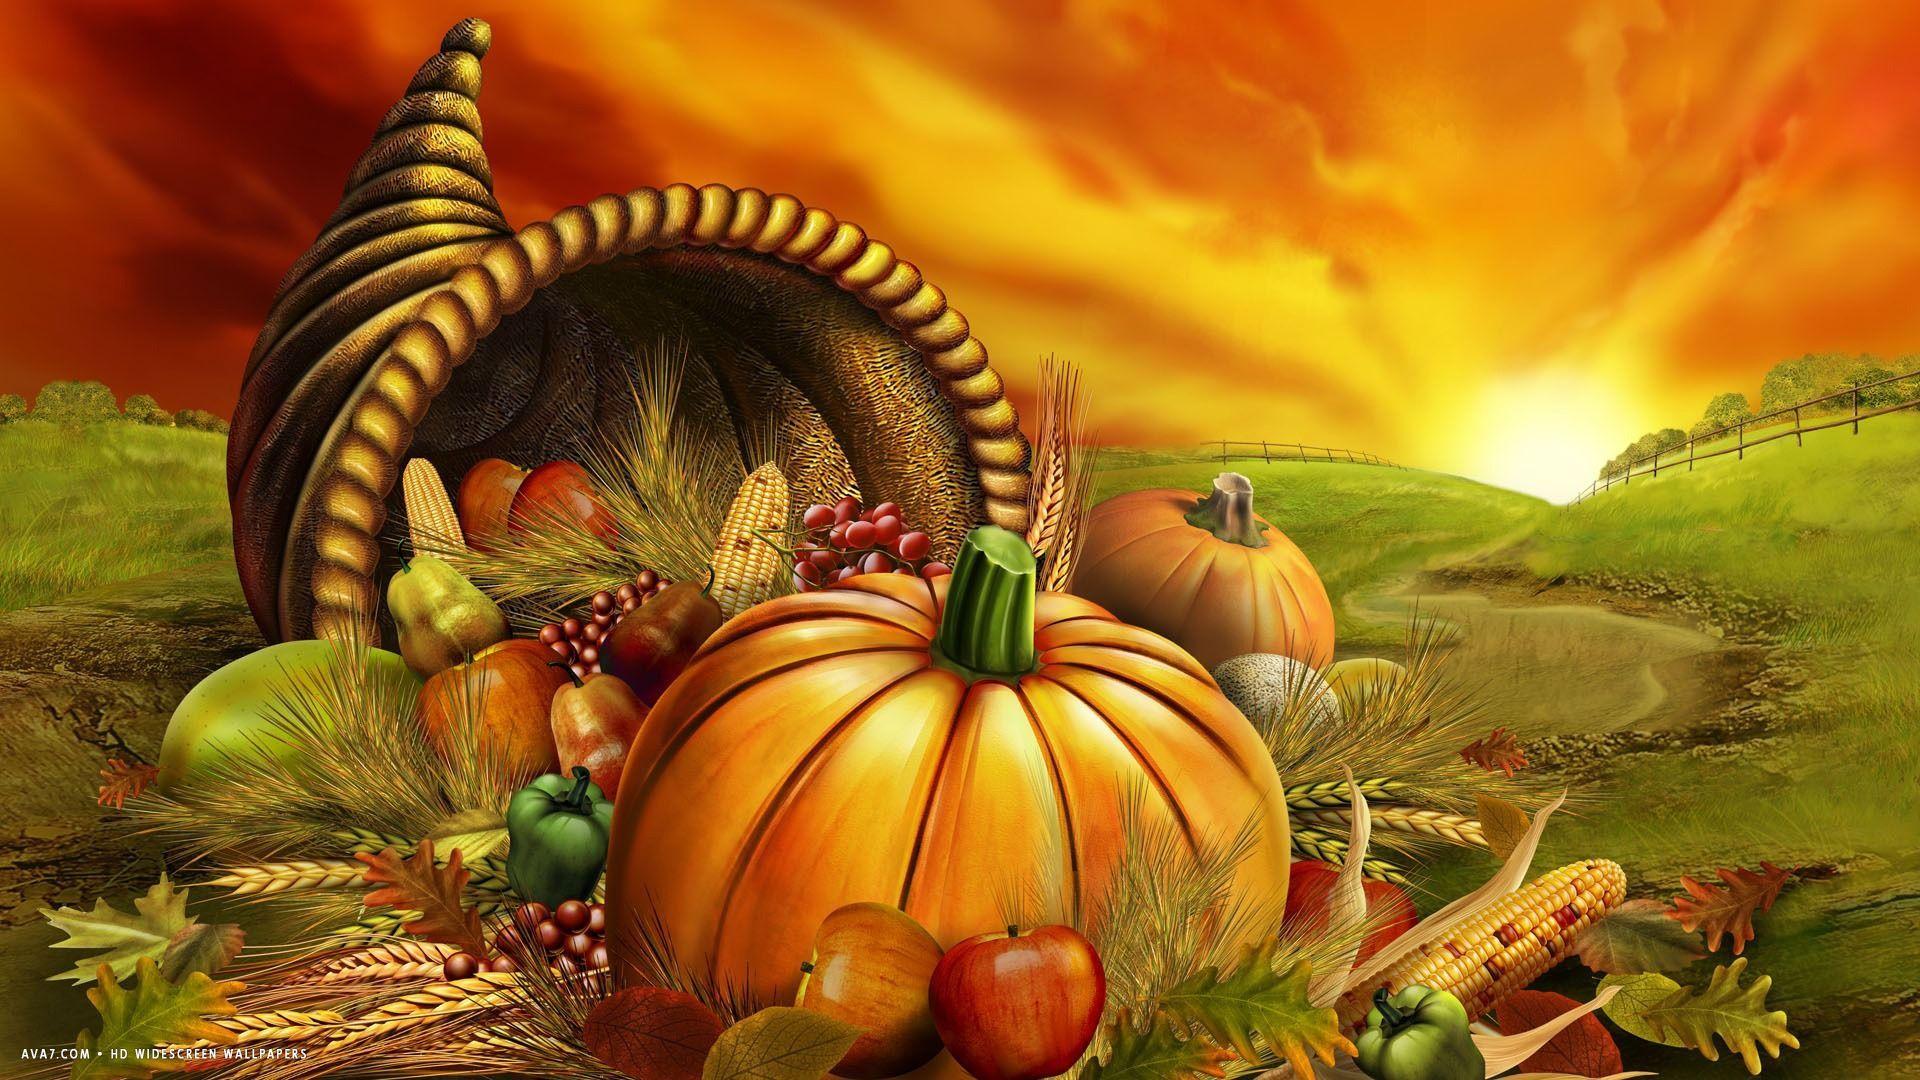 HD wallpaper Pumpkins and Autumn vegetables foodDrink fall thanksgiving   Wallpaper Flare